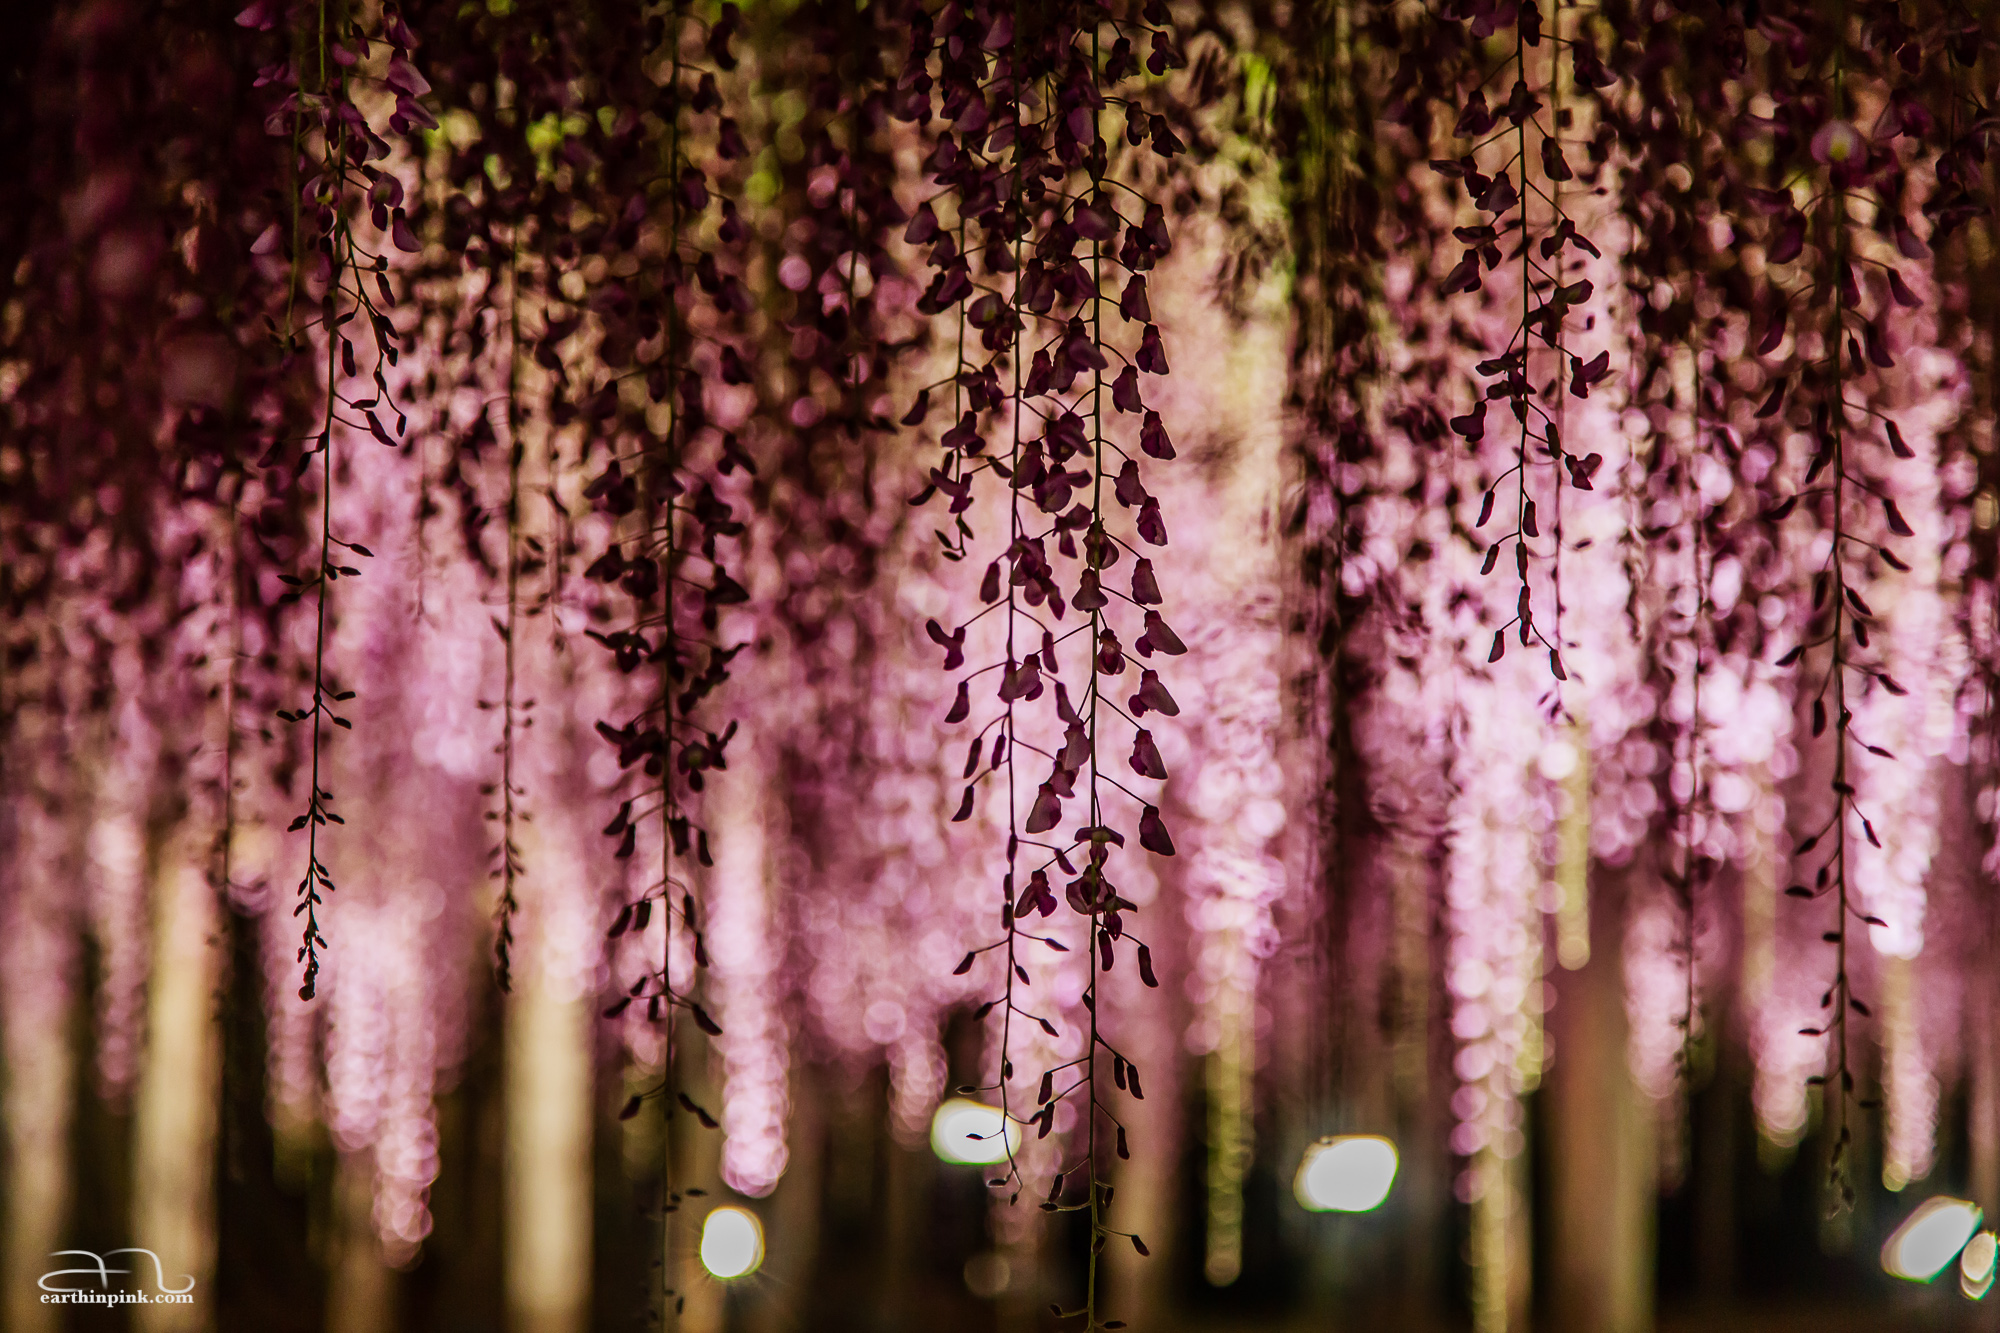 Night illumination of one of the giant wisteria trees at Ashikaga Flower Park.